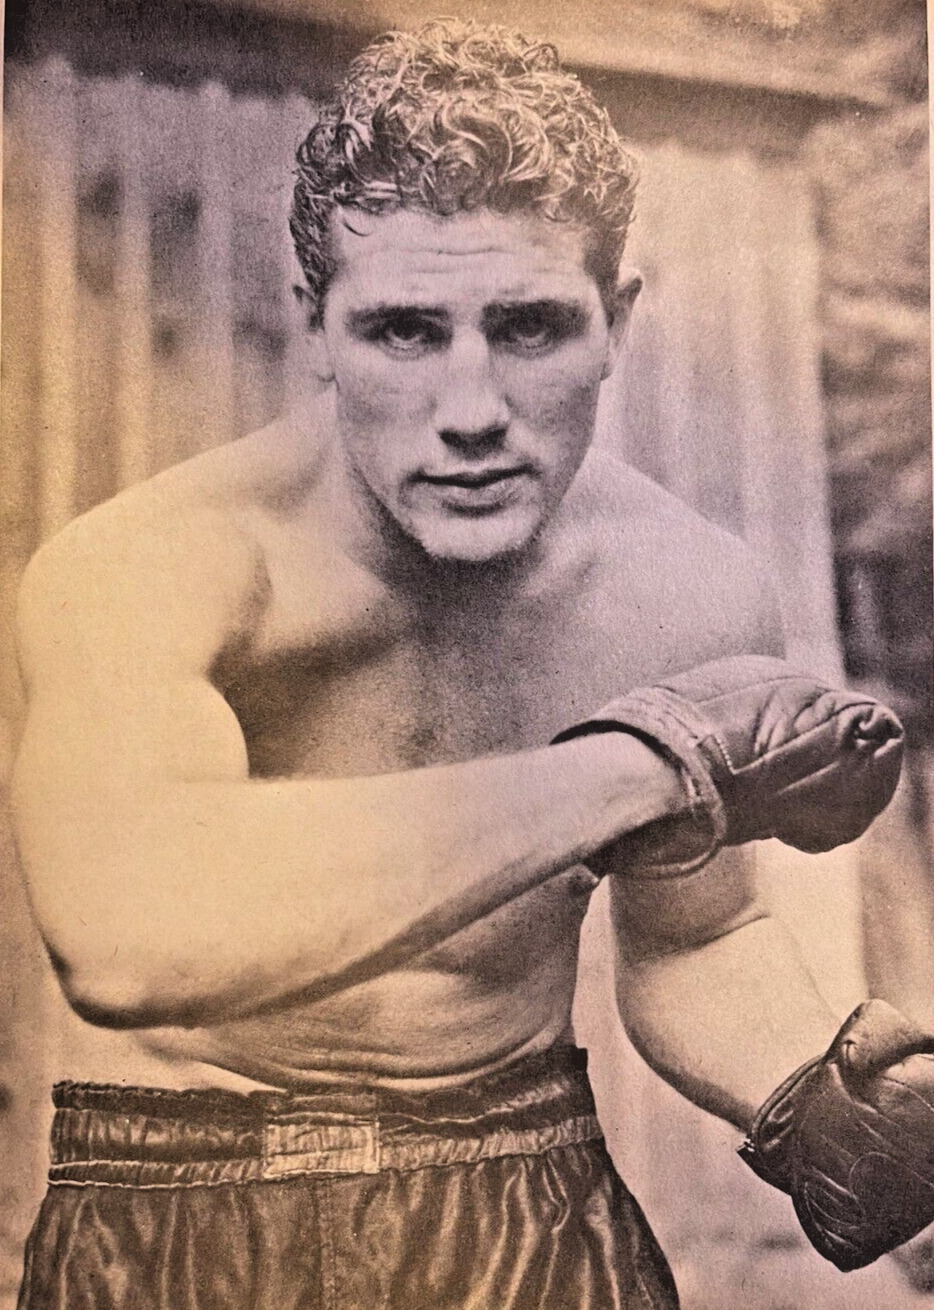 1981 Boxer Billy Conn